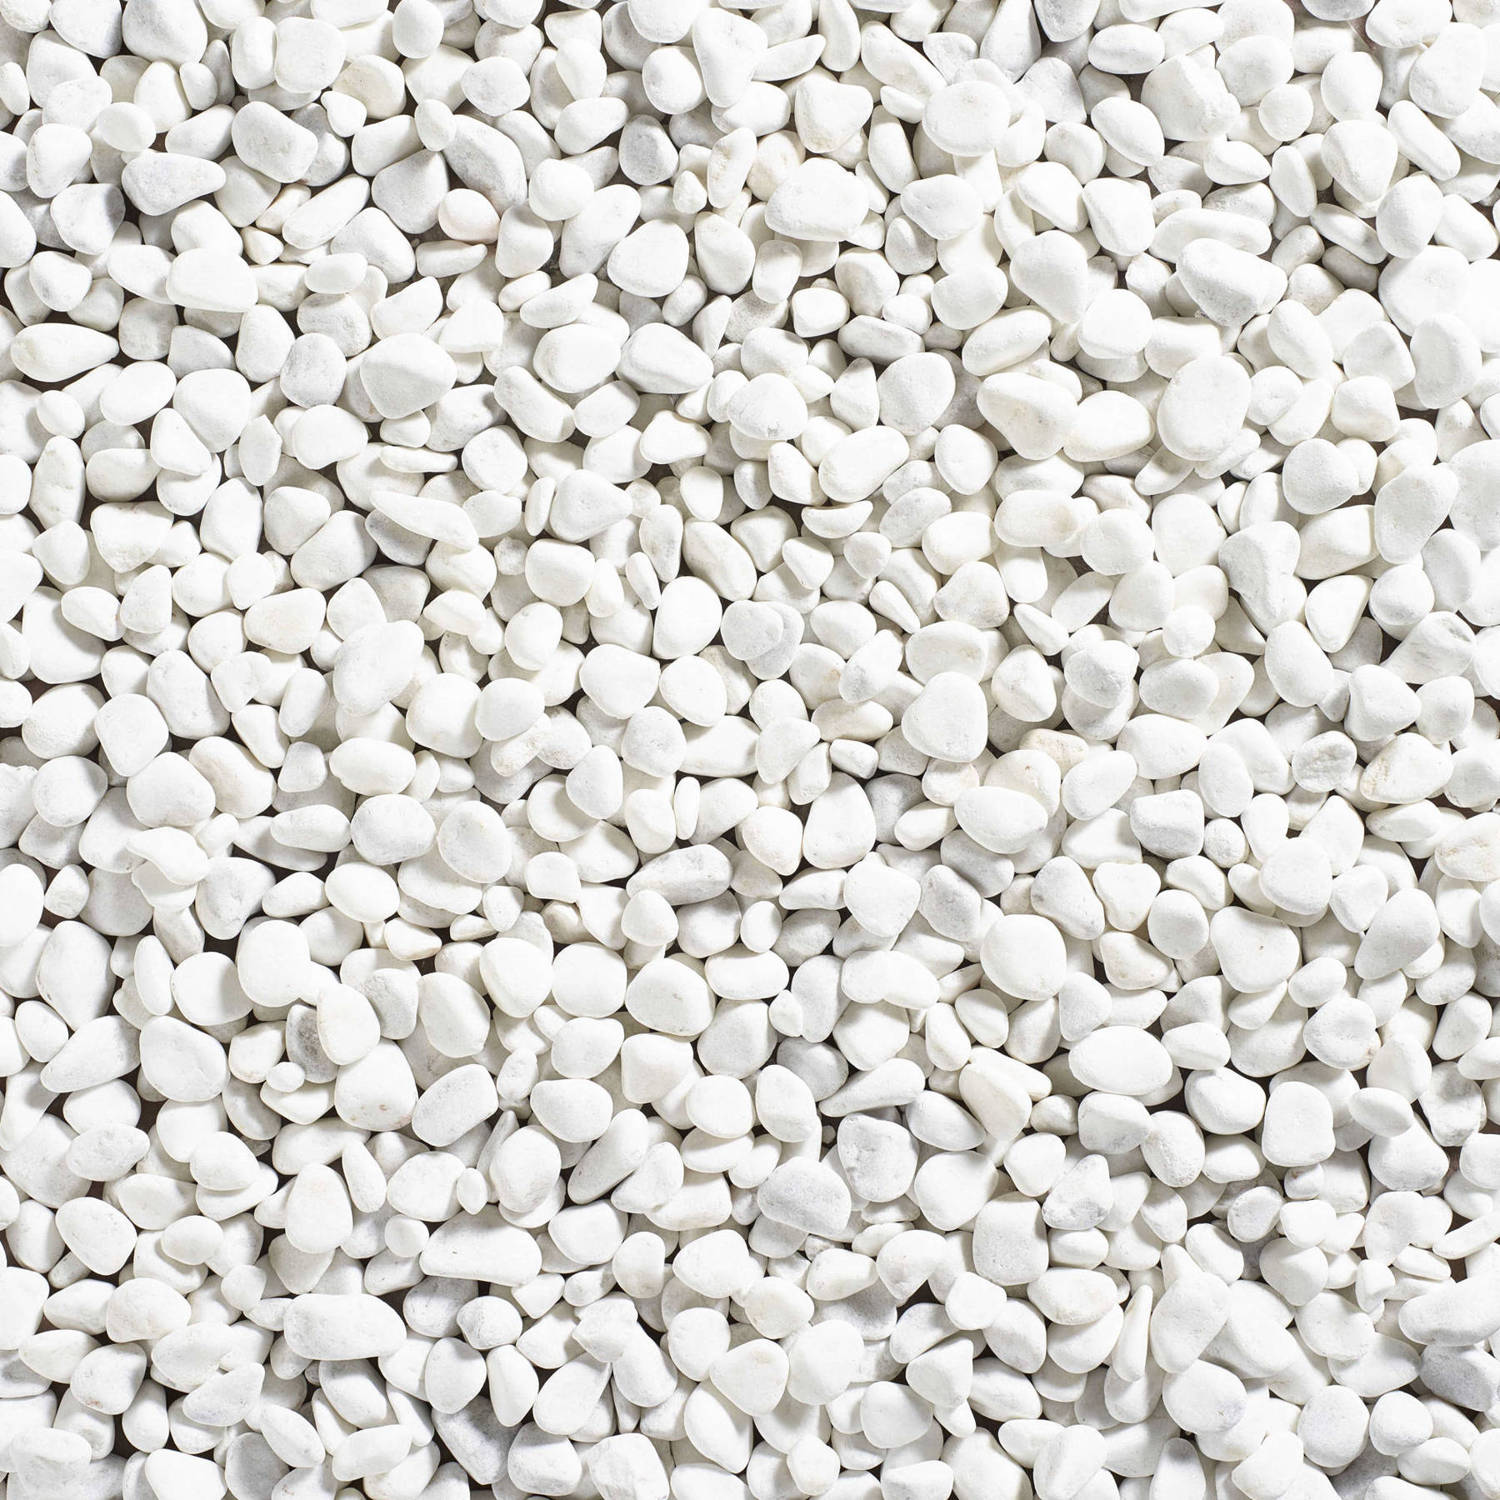 Coral White Decorative Pebbles Stones.